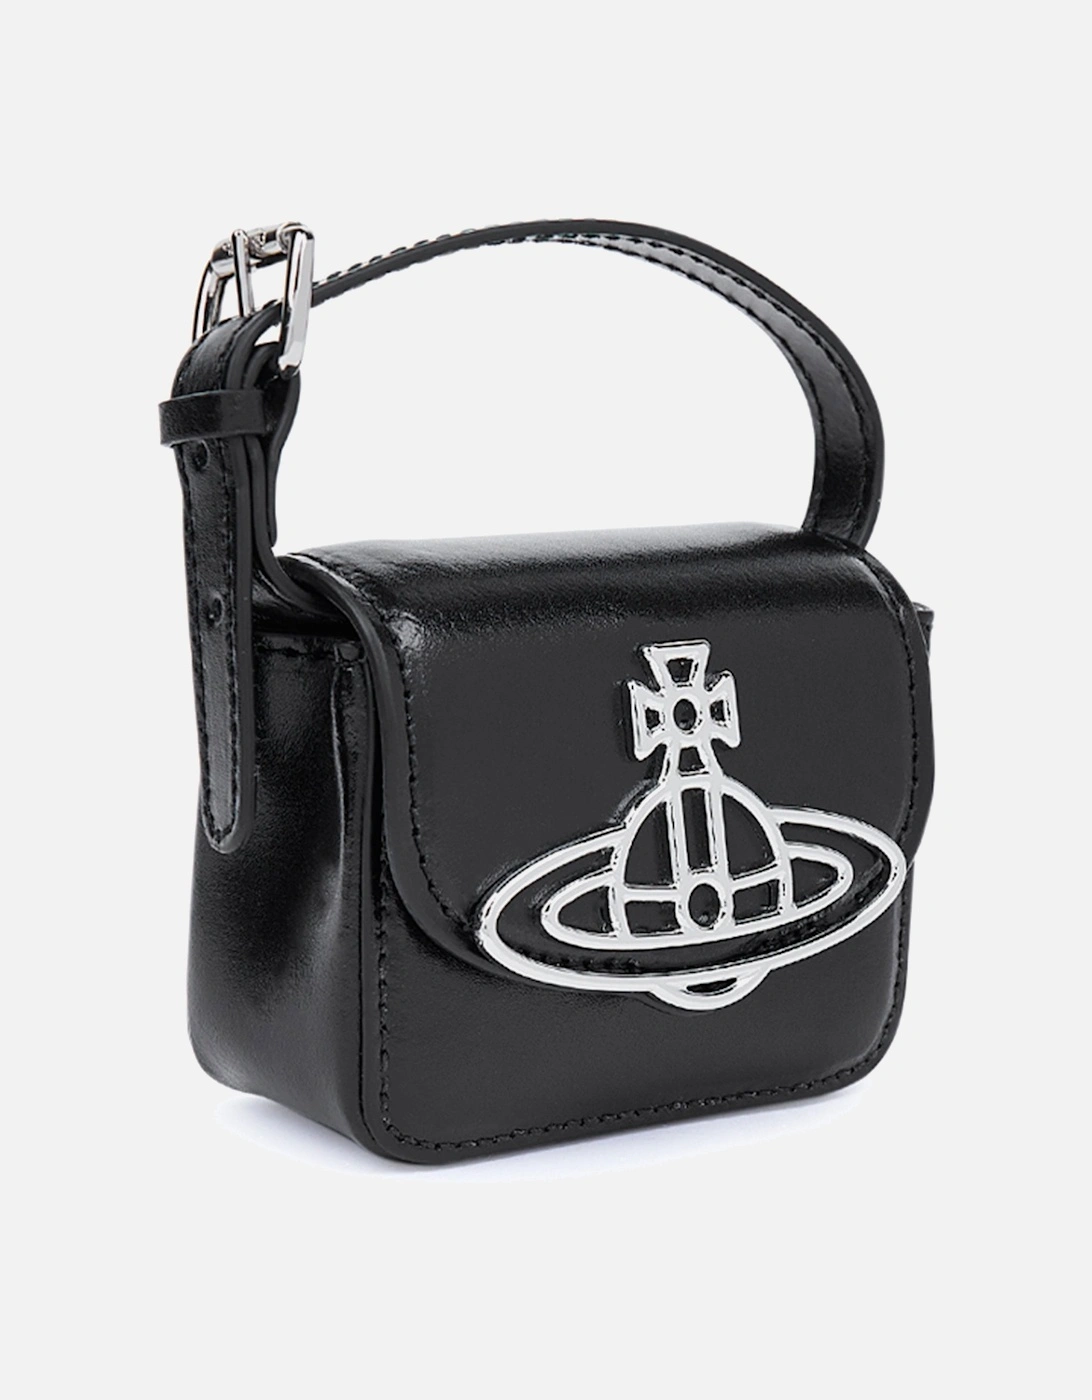 Mirage LH Extra Mini Black Handbag